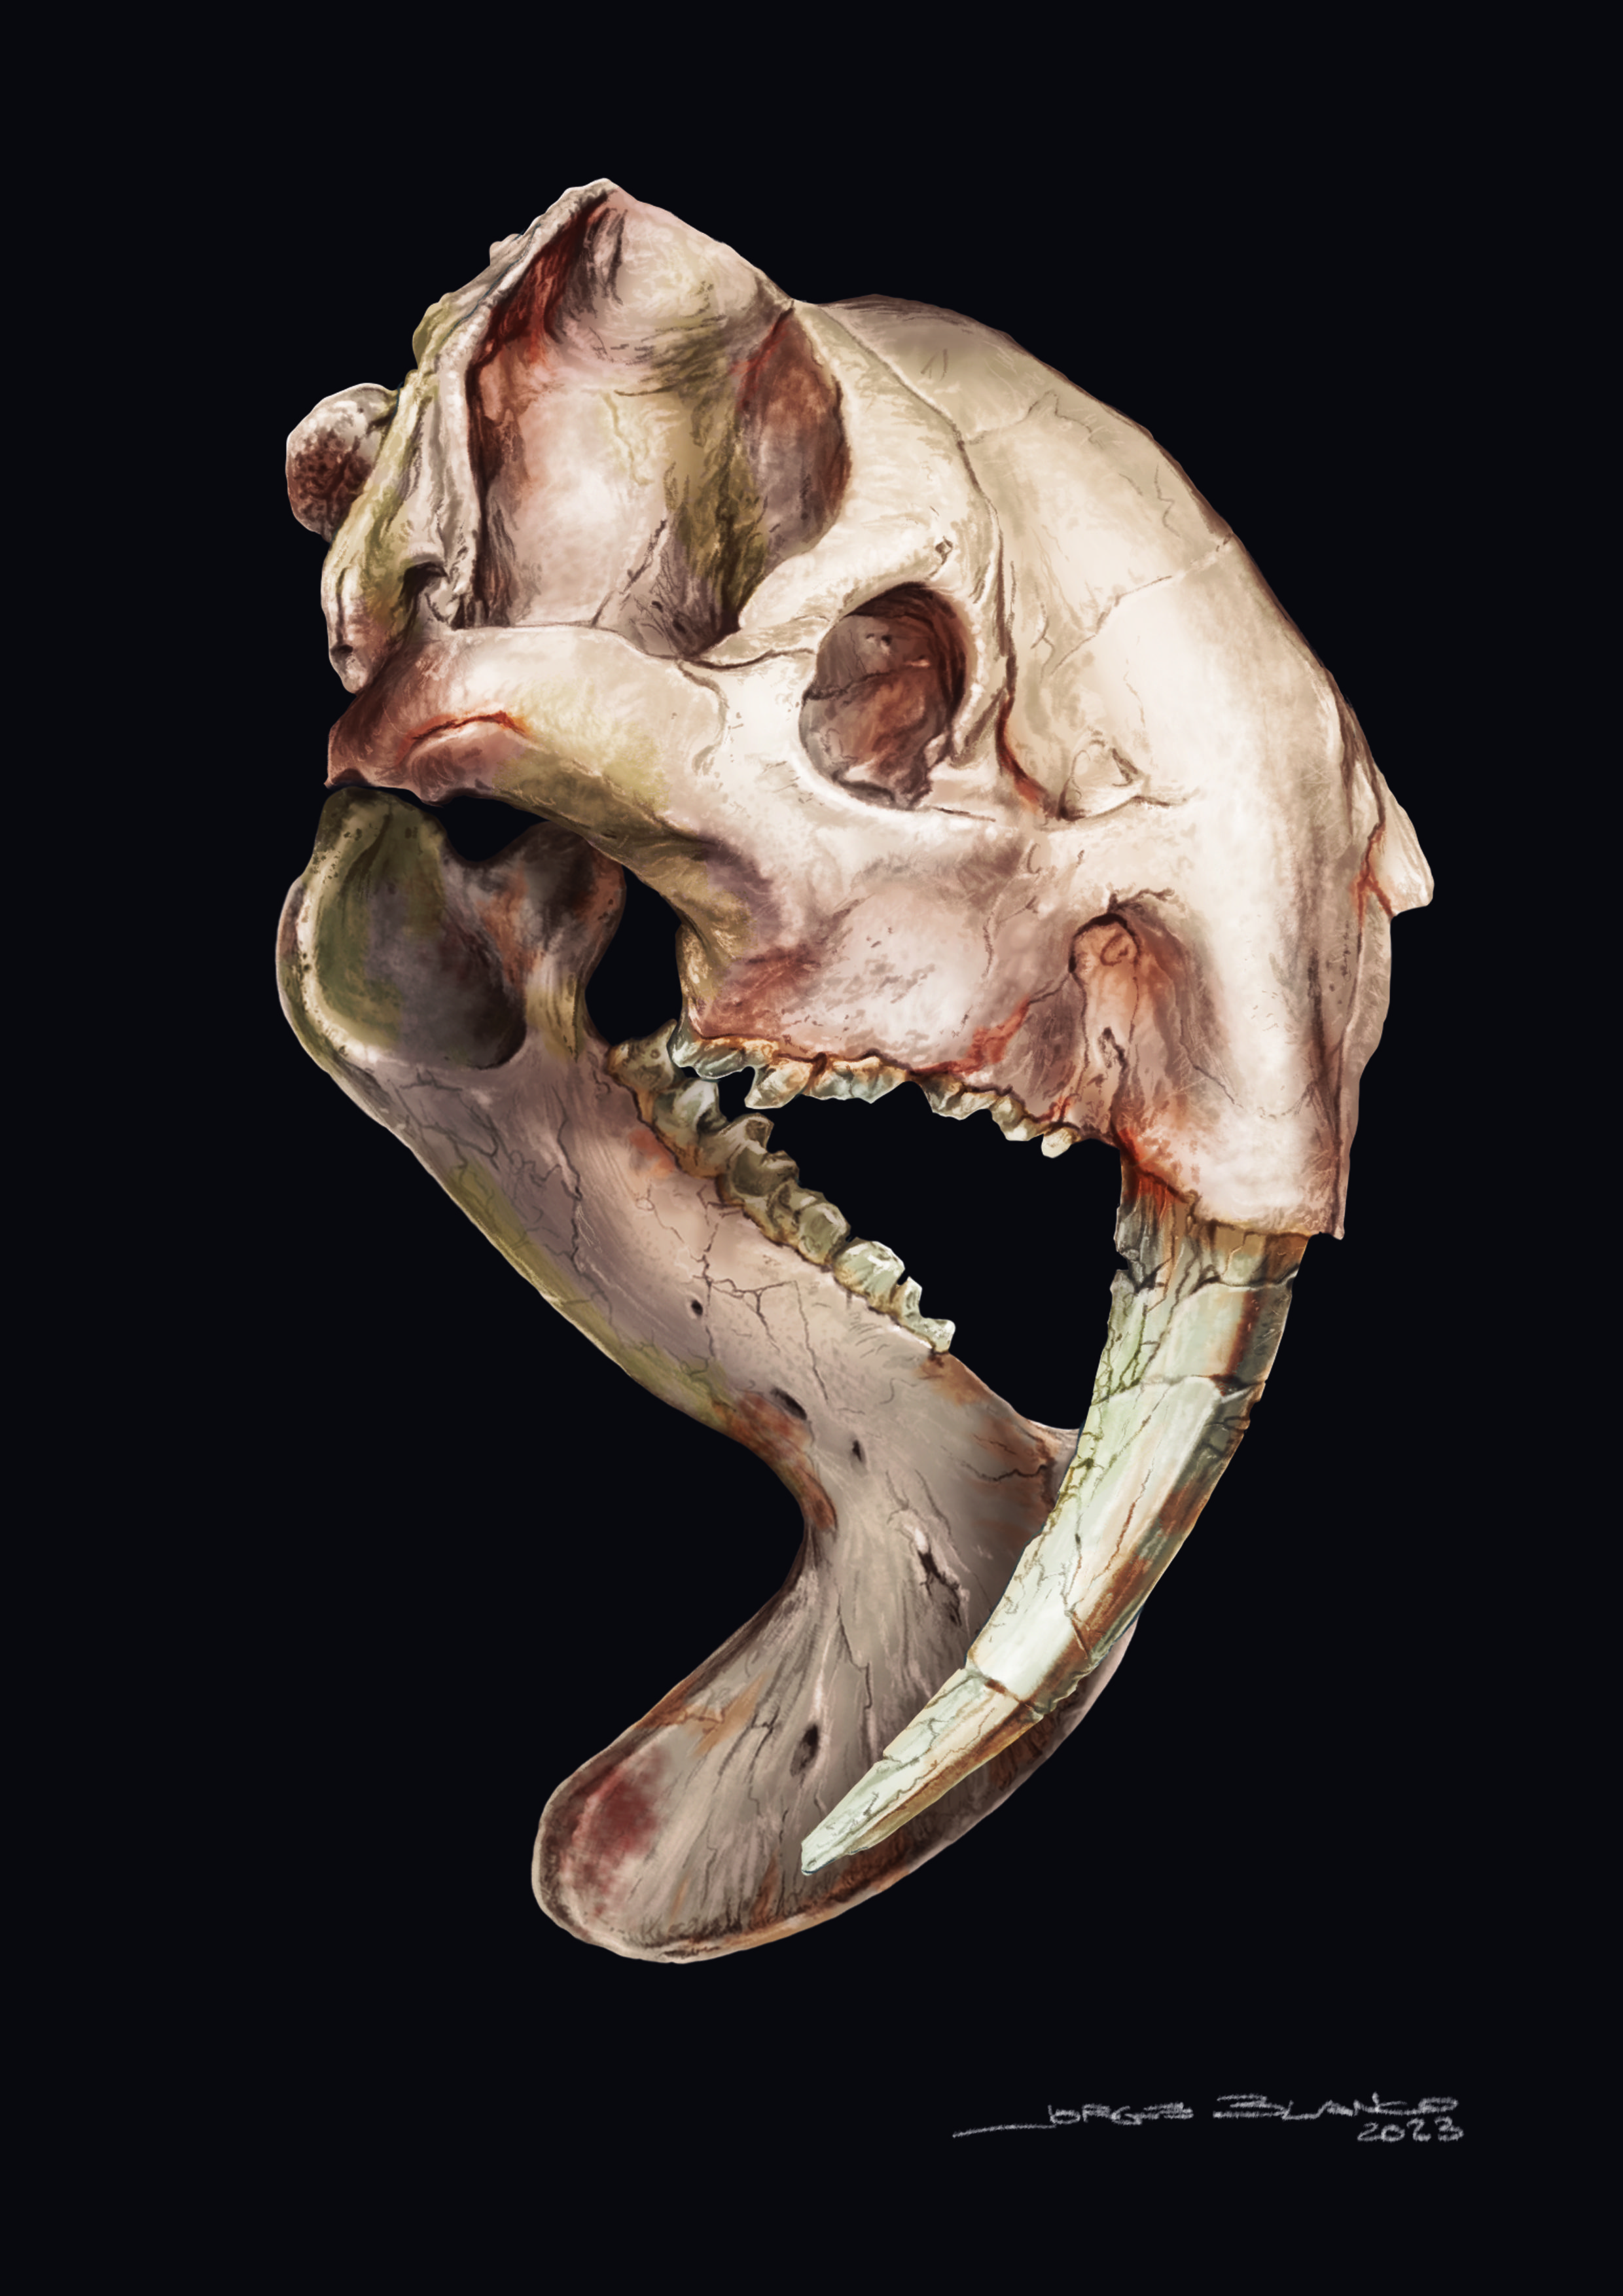 skull of Thylacosmilus atrox drawing showing enormous teeth and eye sockets.